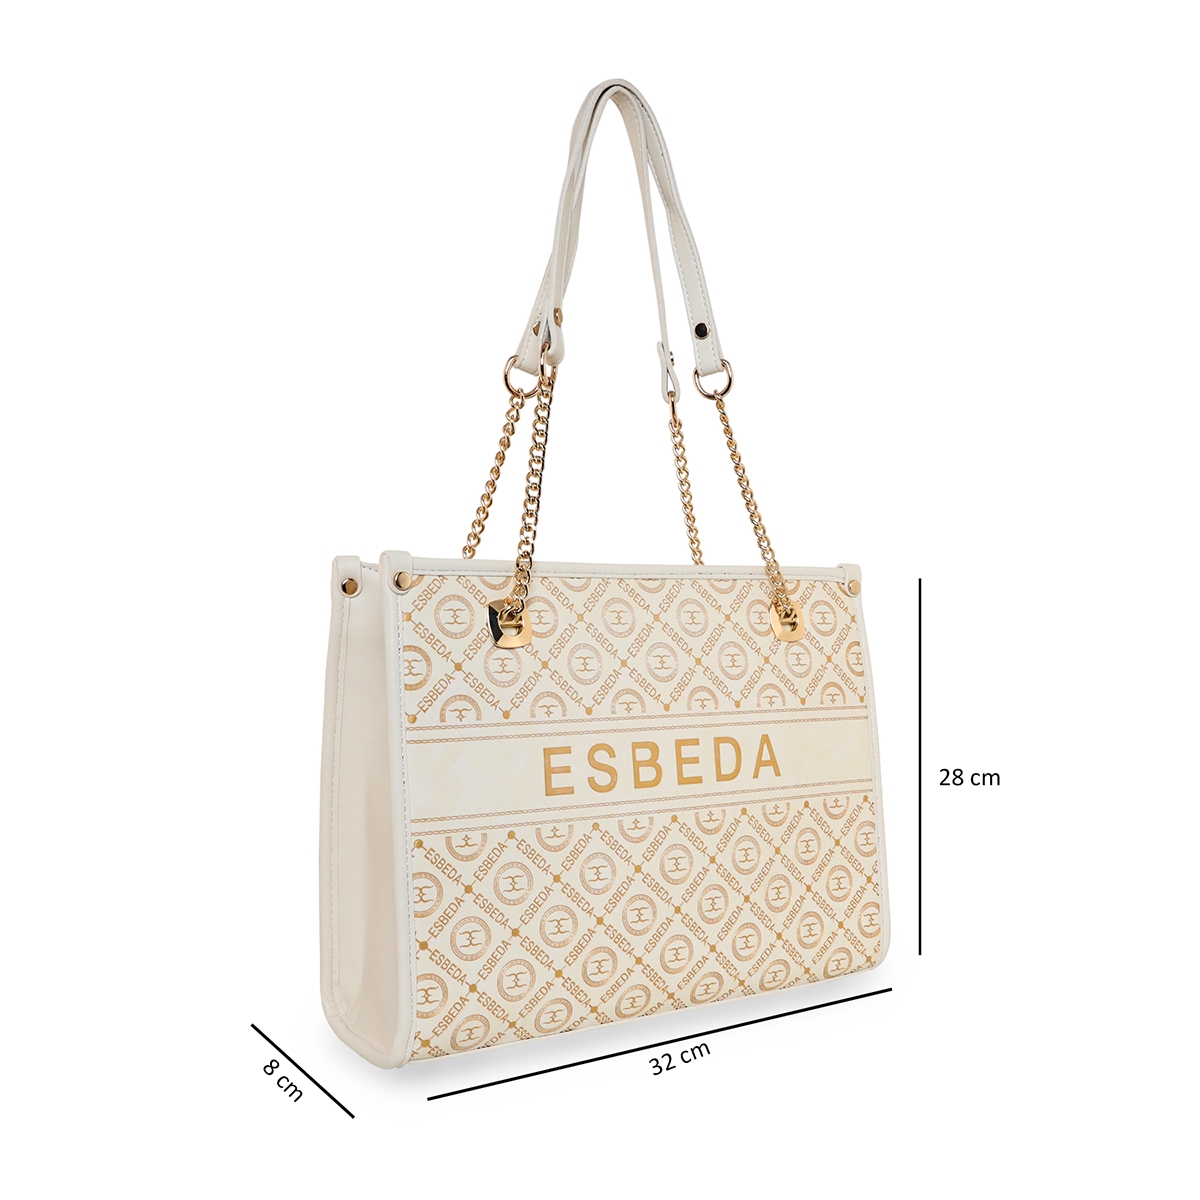 ESBEDA Gold Color ESBEDA Logo Embossed Handbag For Women